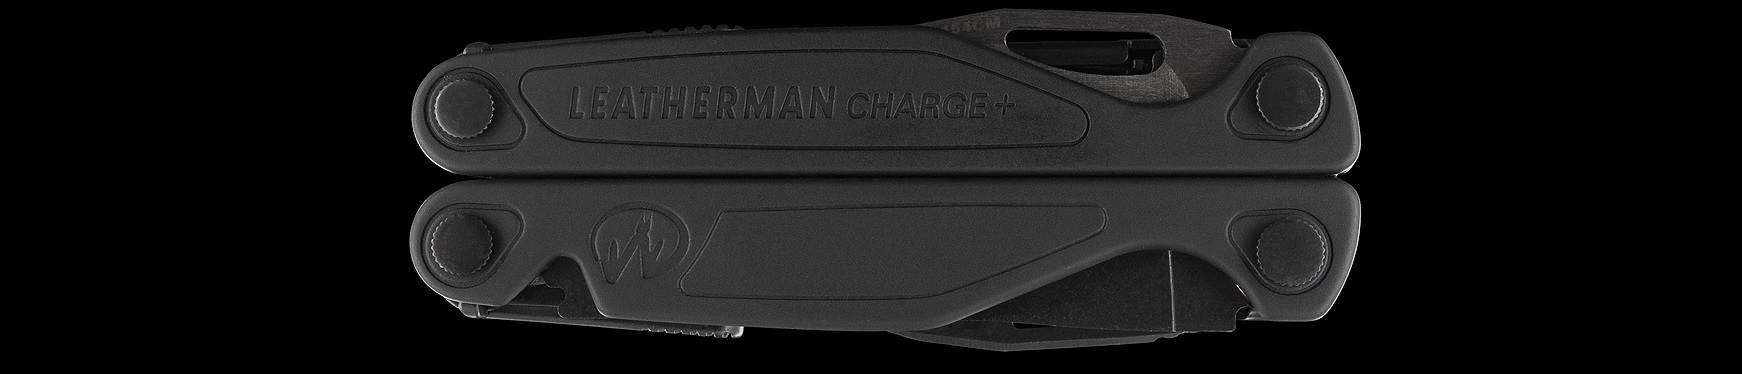 Мультиинструмент Leatherman Charge Plus Black